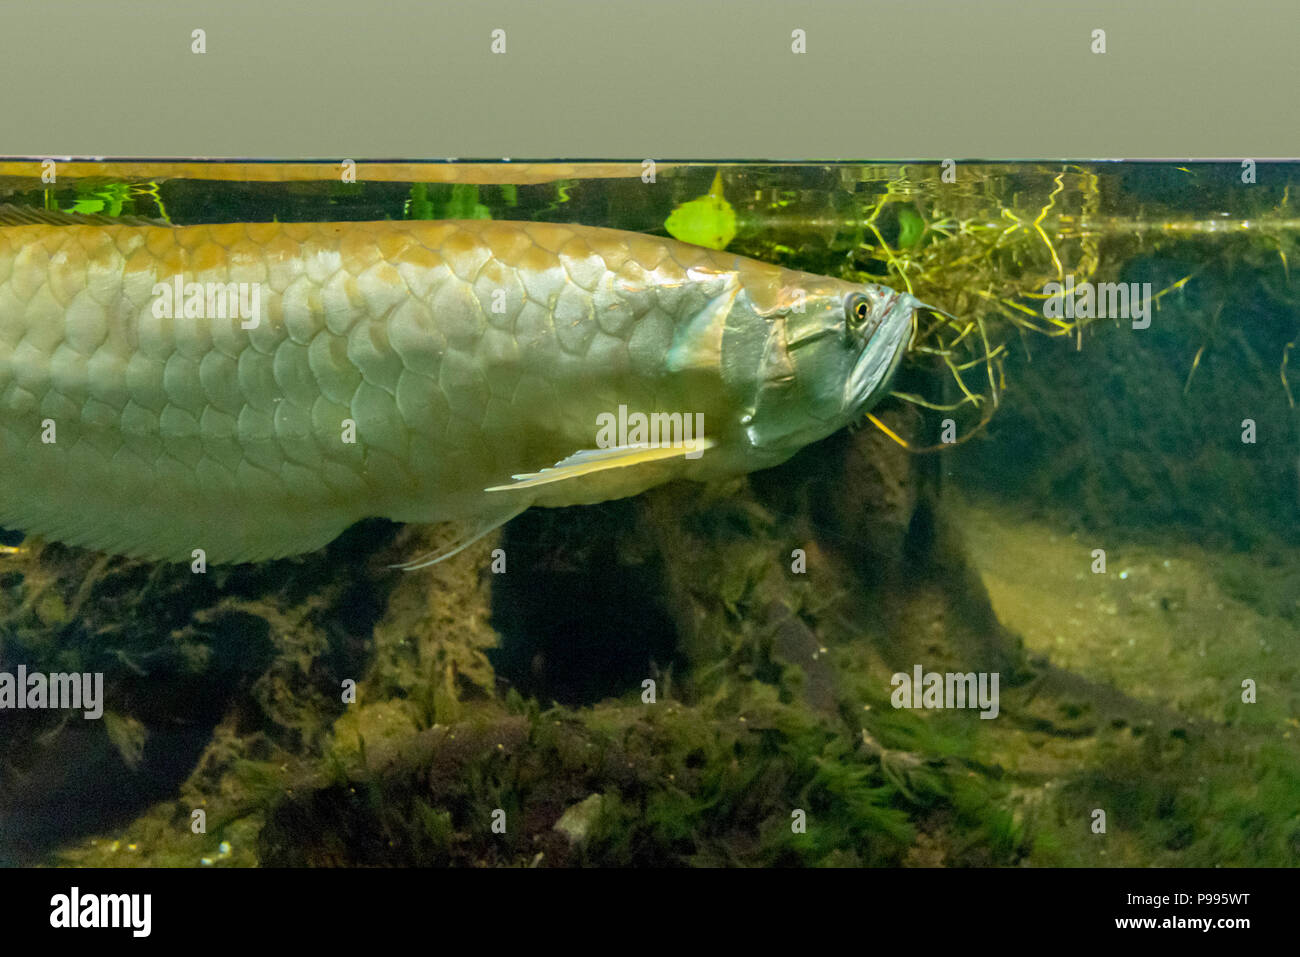 underwater scenery showing a Silver Arowana fish in riparian ambiance Stock Photo